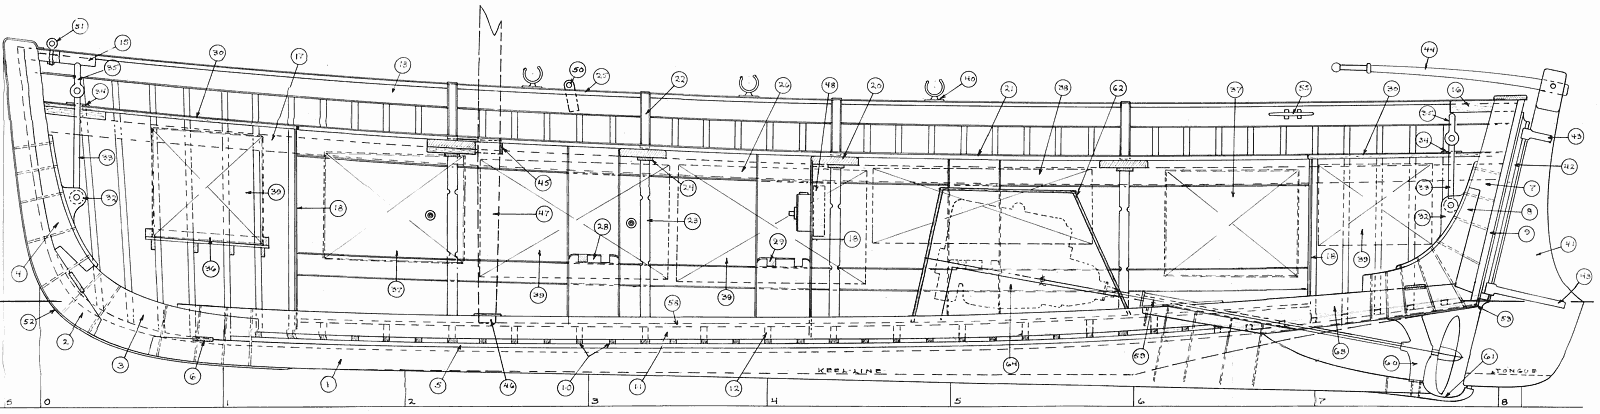 1938 MODERN MOTOR BOAT PLANS DESIGNS Book Ideal Series Vol VIII Wm